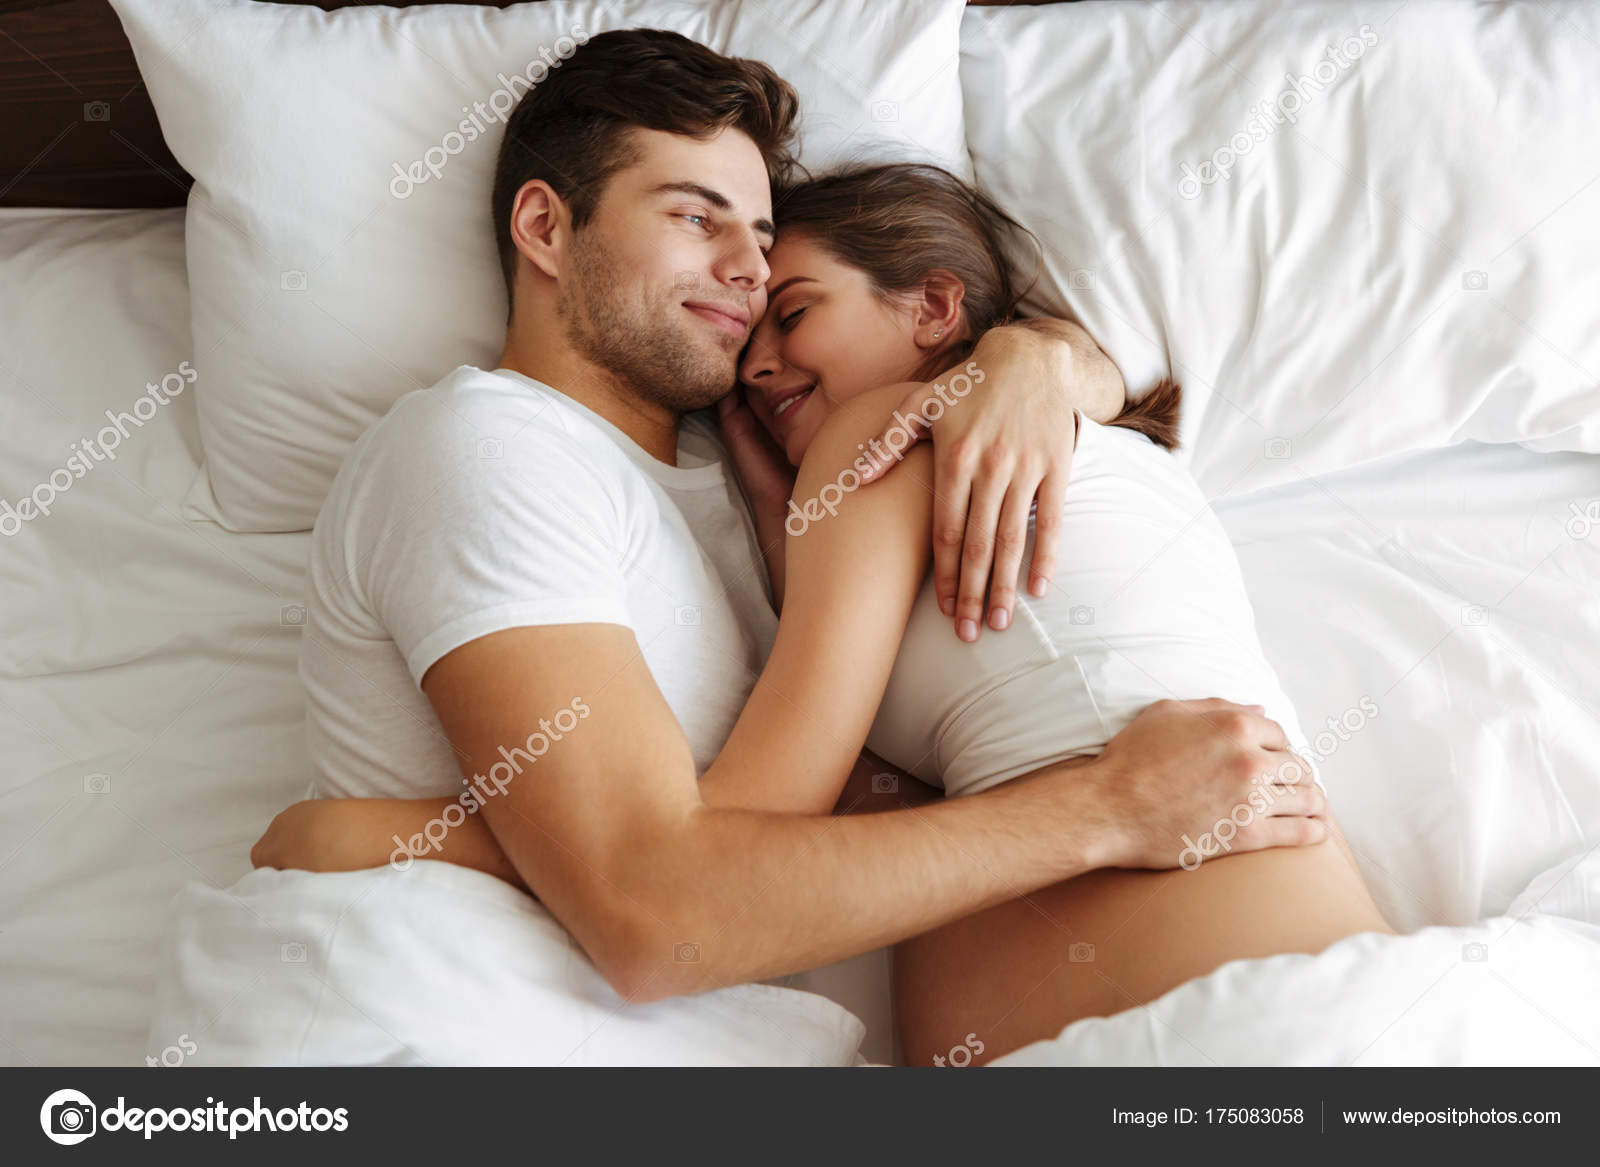 Дома с мужем на кровати. Мужчина и женщина в постели.